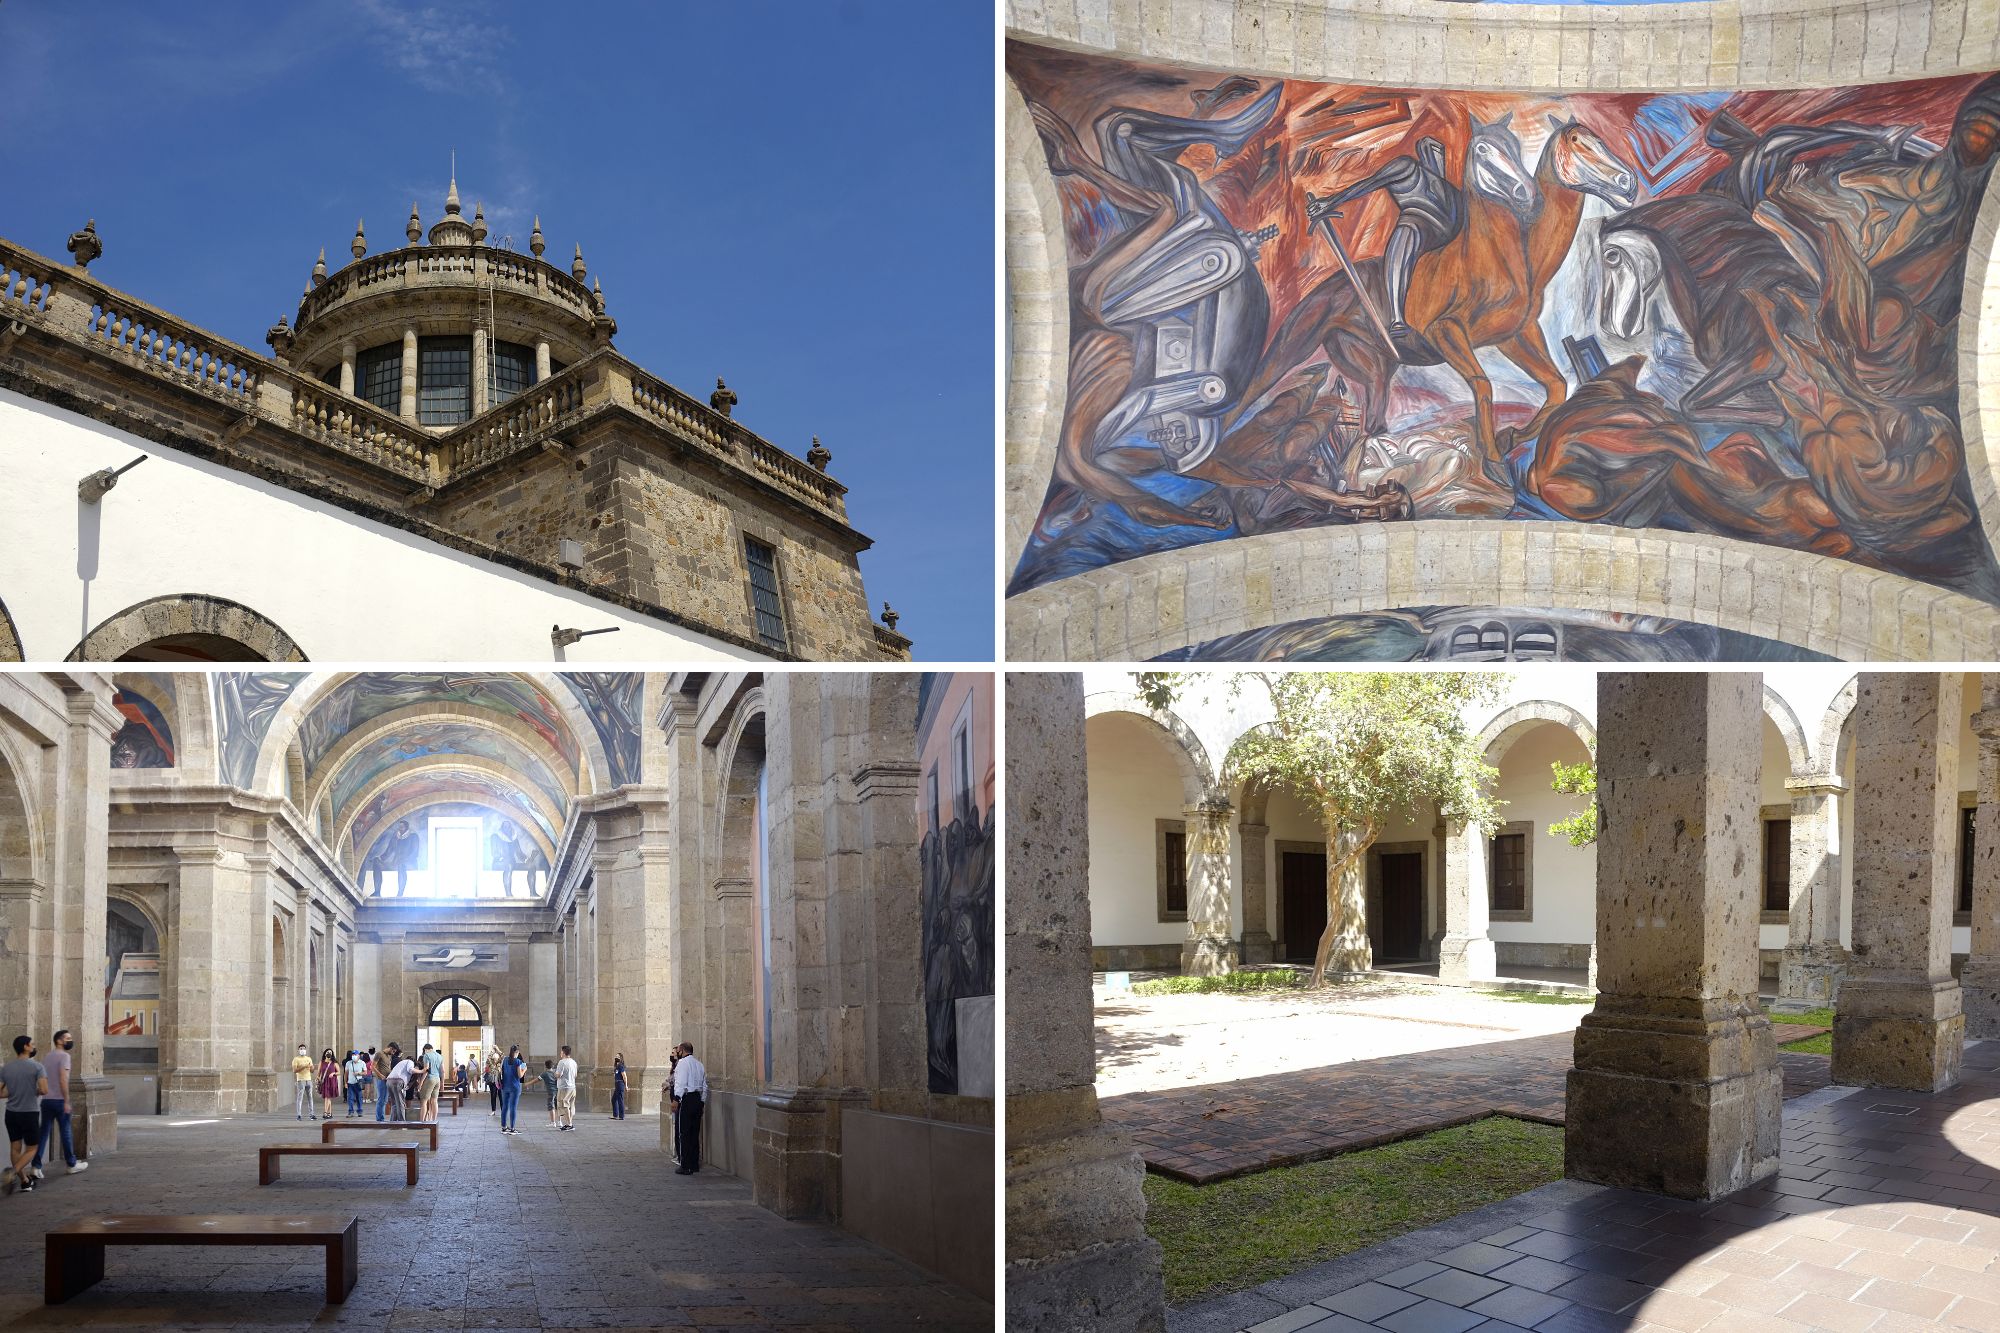 Views of Hospicio Cabañas buildings and artworks